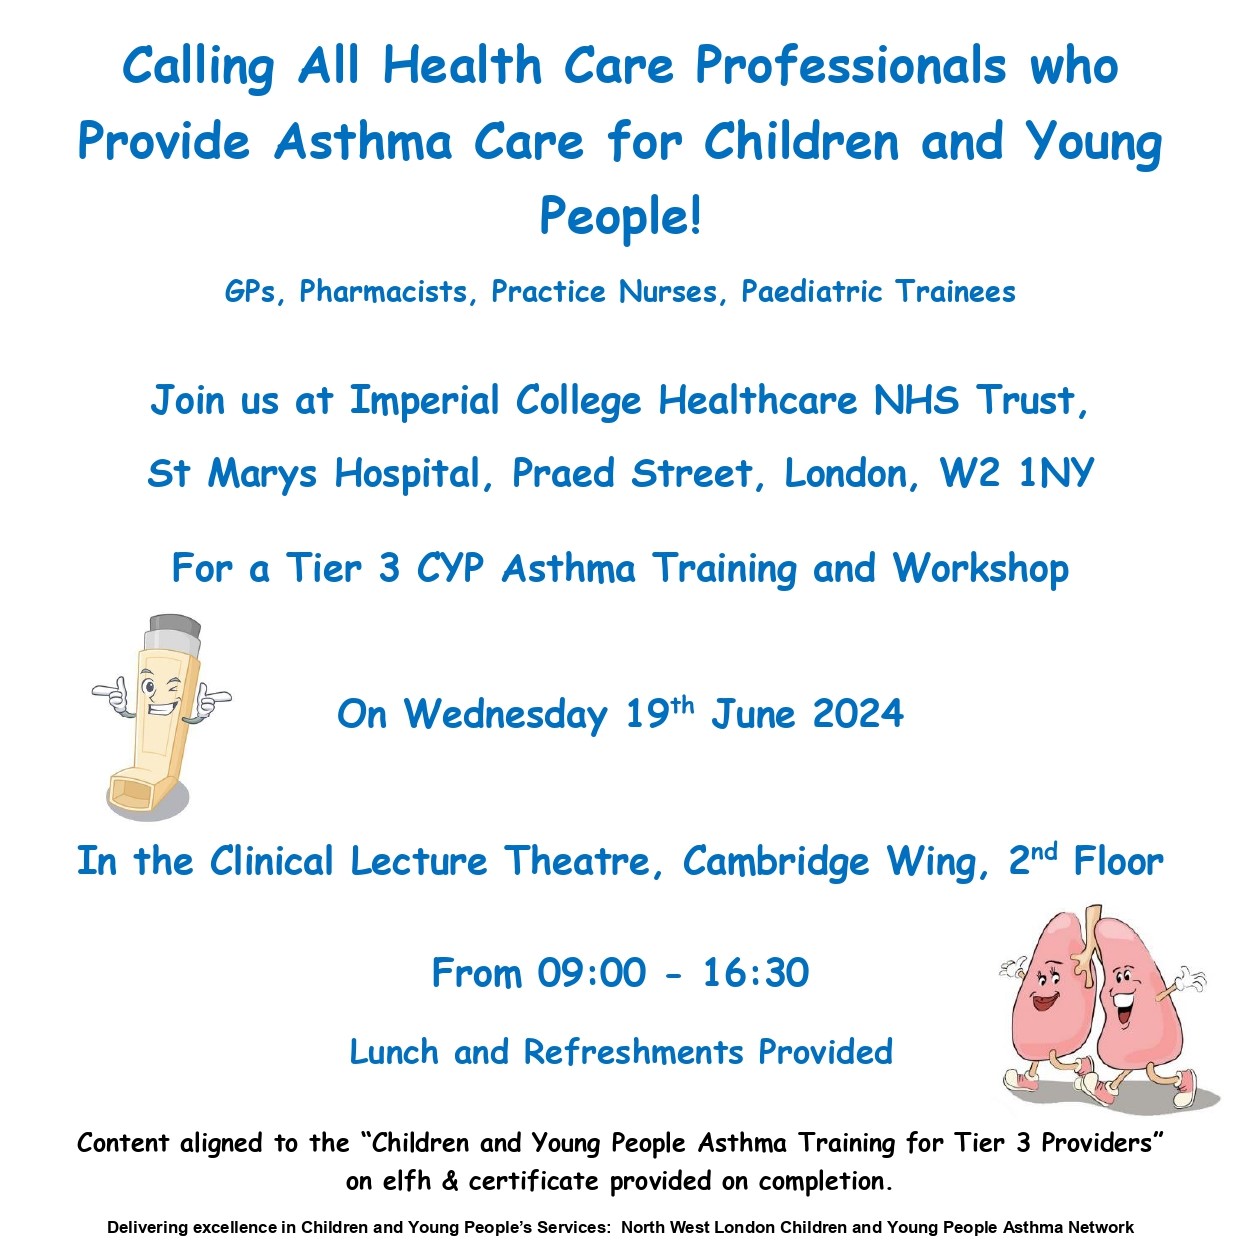 CYP asthma training workshop - in-person